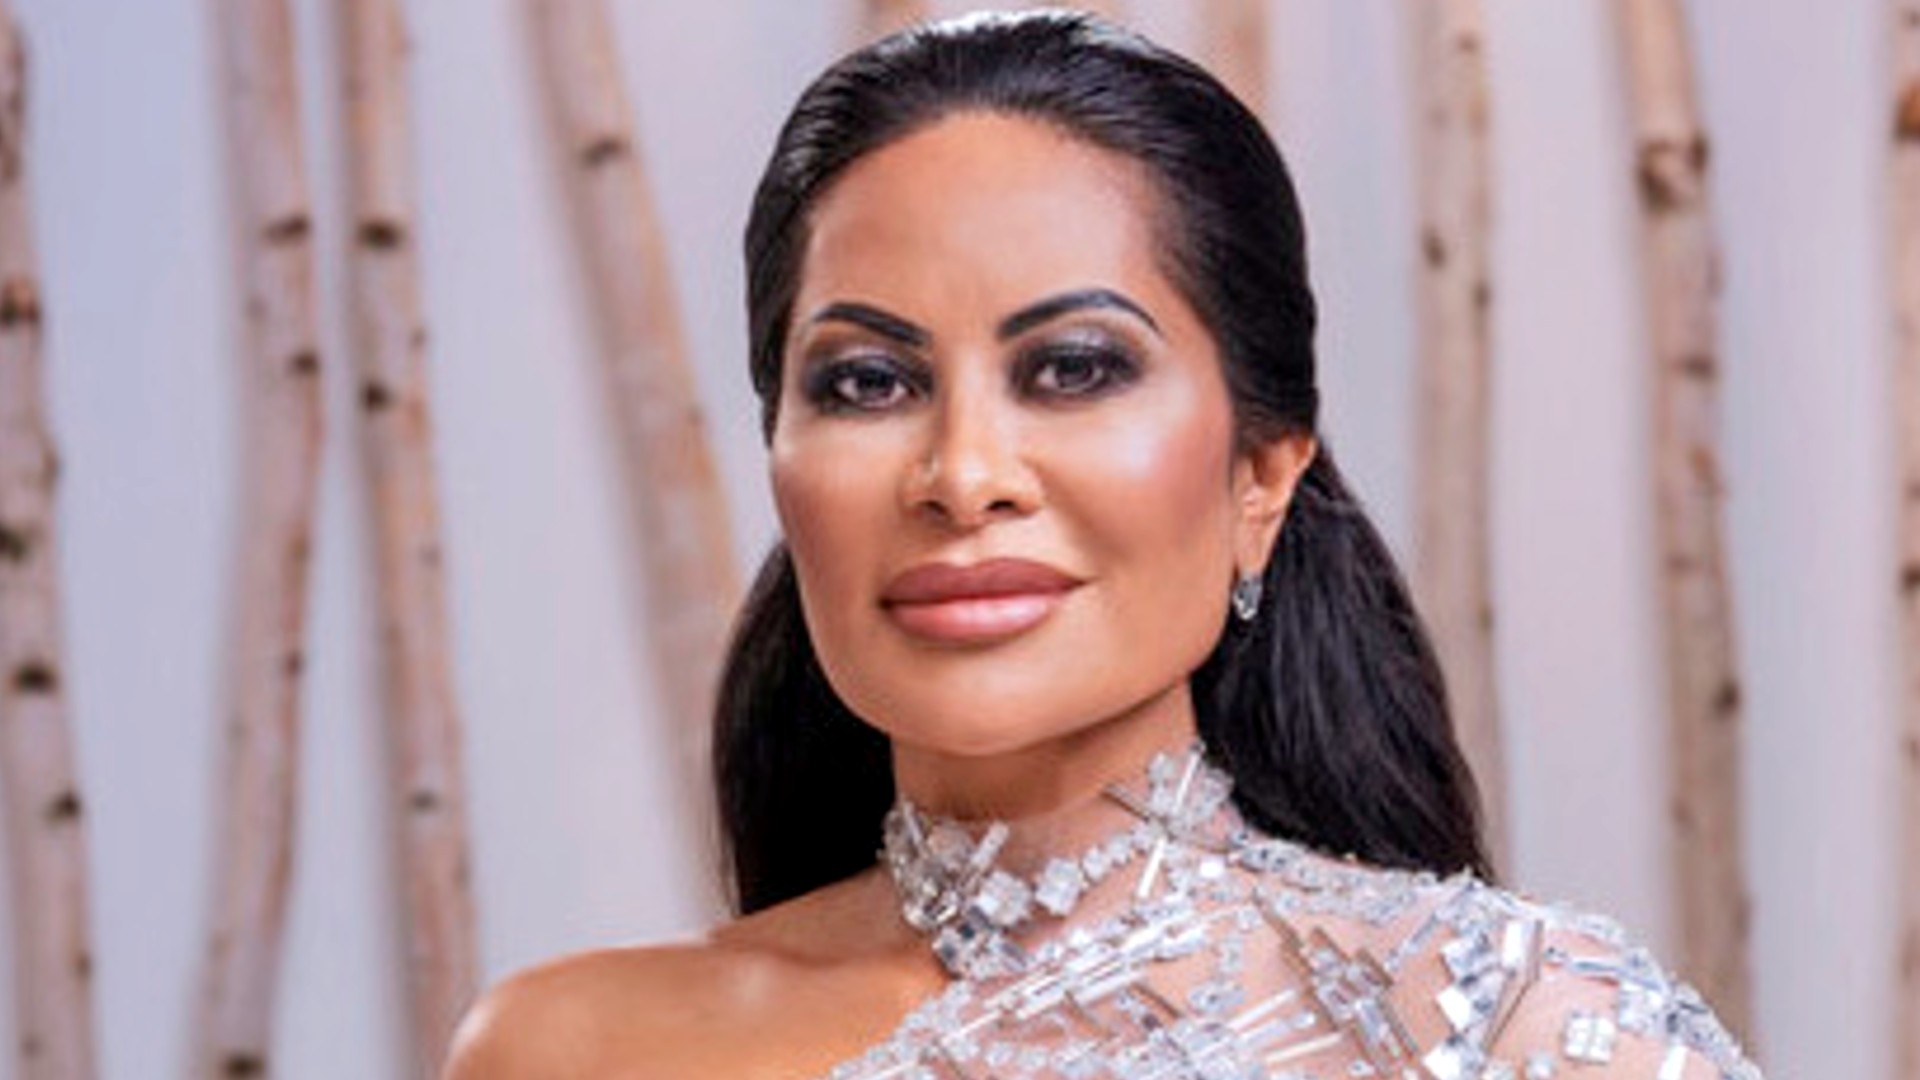 ‘Real Housewives of Salt Lake City’ Star Jen Shah Asks Court for Reduced Prison Sentence